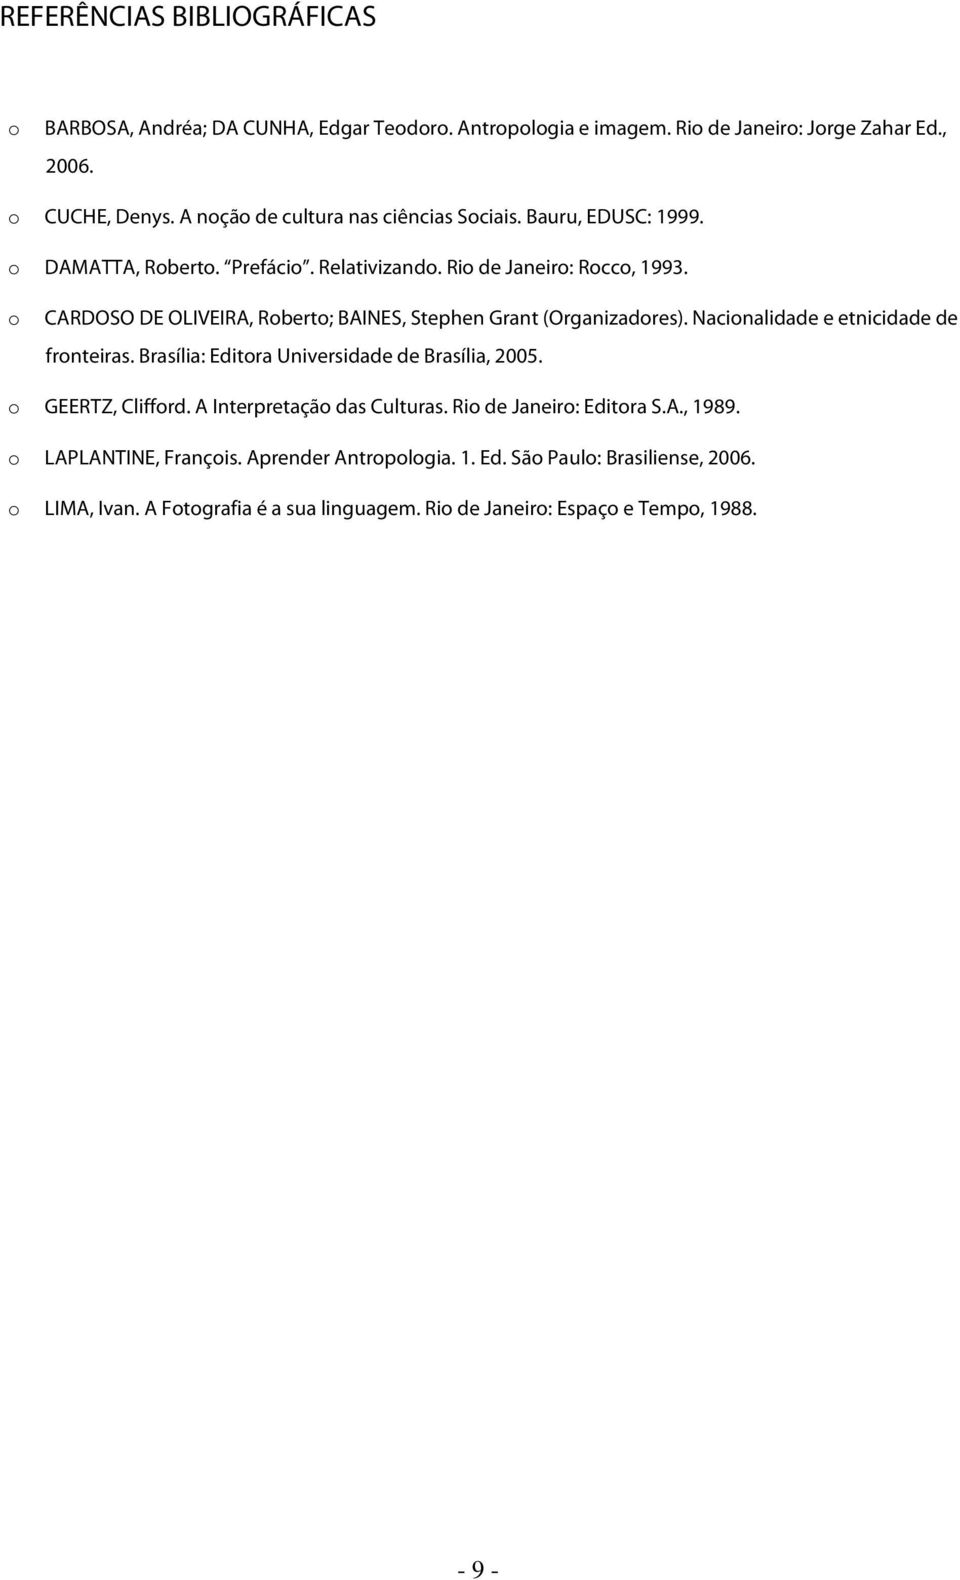 o CARDOSO DE OLIVEIRA, Roberto; BAINES, Stephen Grant (Organizadores). Nacionalidade e etnicidade de fronteiras. Brasília: Editora Universidade de Brasília, 2005.